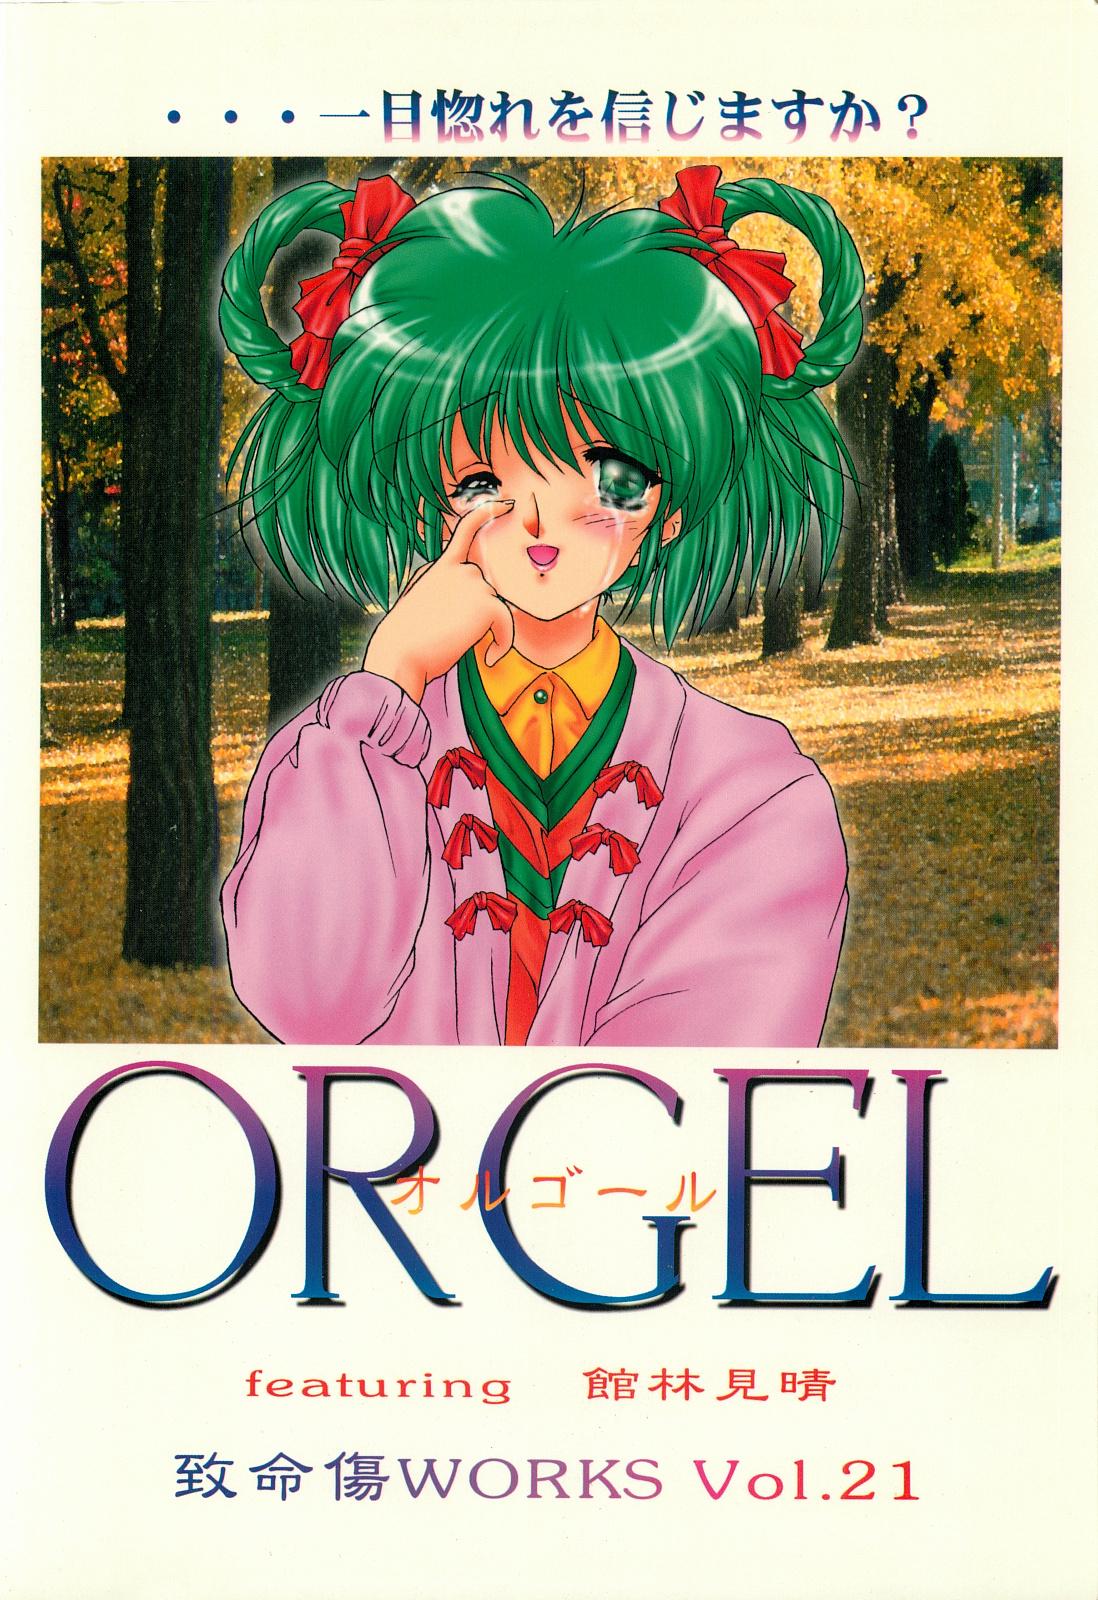 ORGEL featuring Tatebayashi Miharu 33